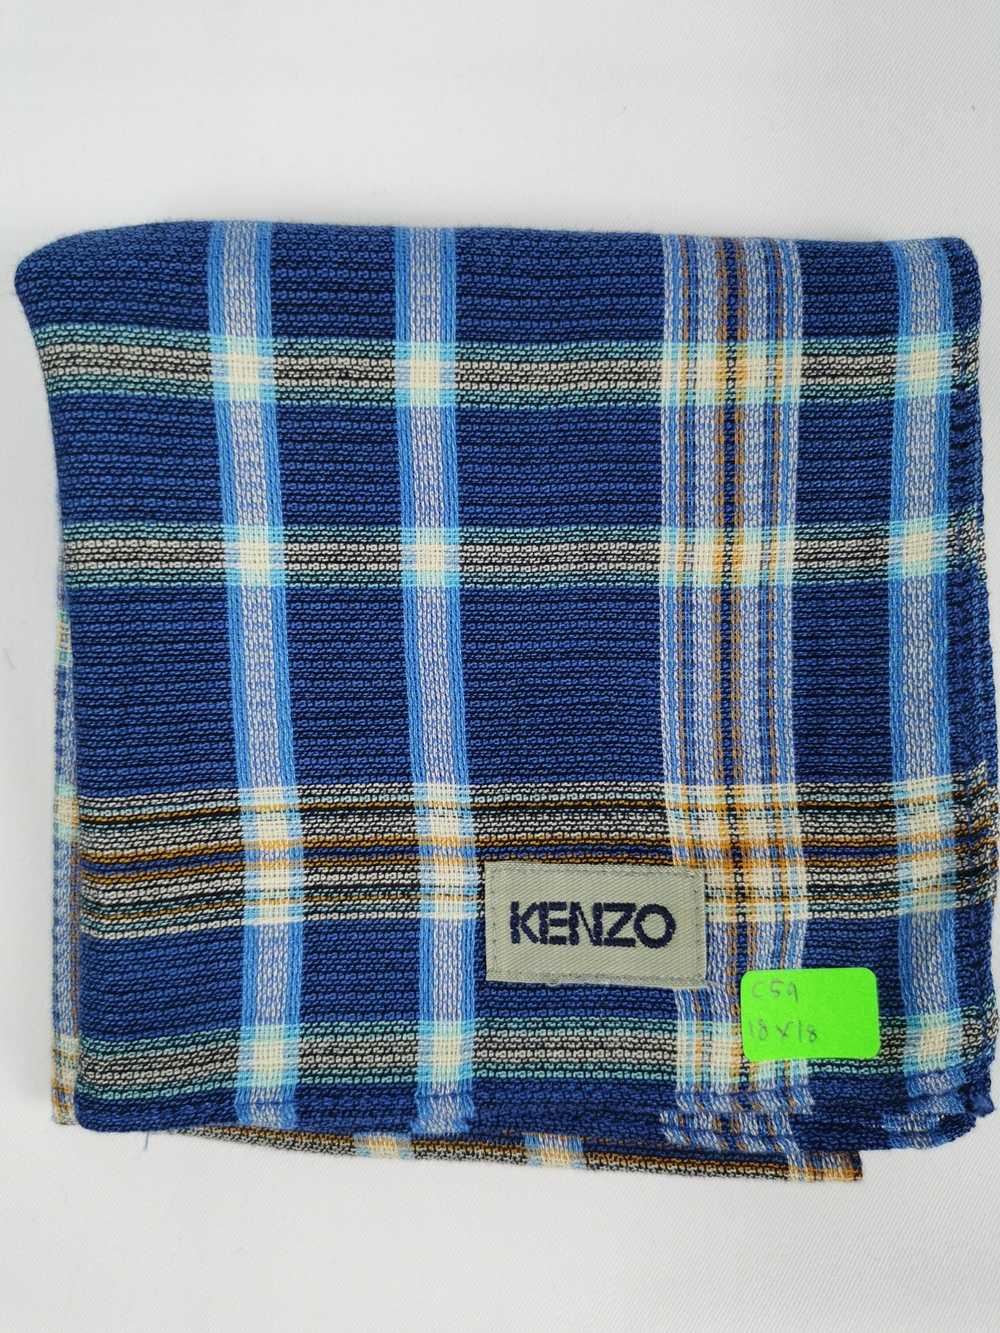 Kenzo Kenzo handkerchief bandana neckerchief - image 5